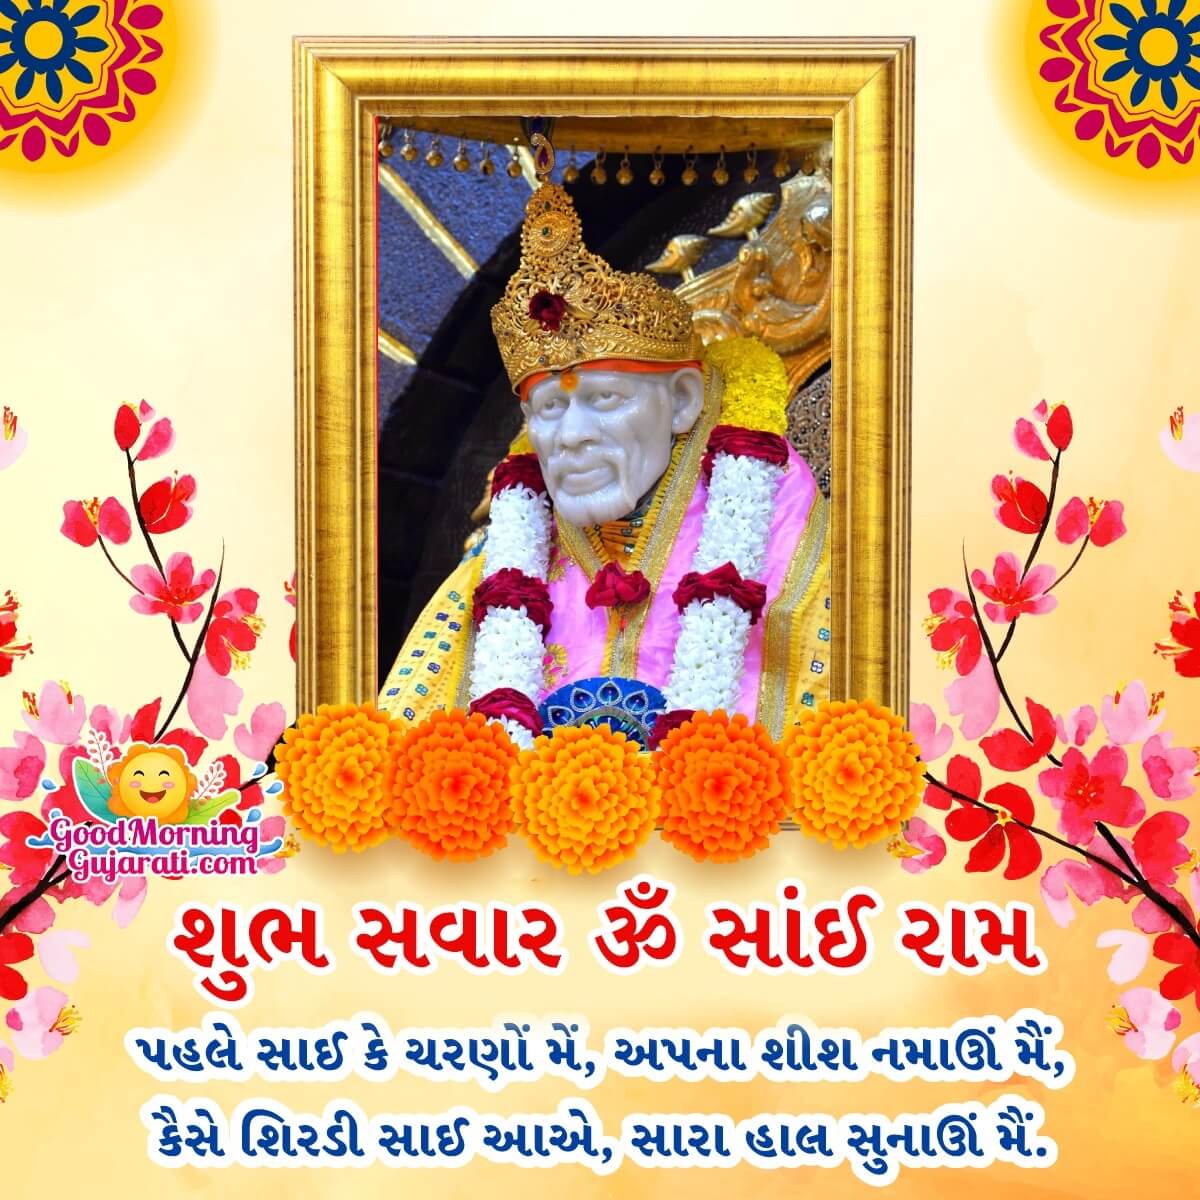 Good Morning Sai Baba Images In Gujarati